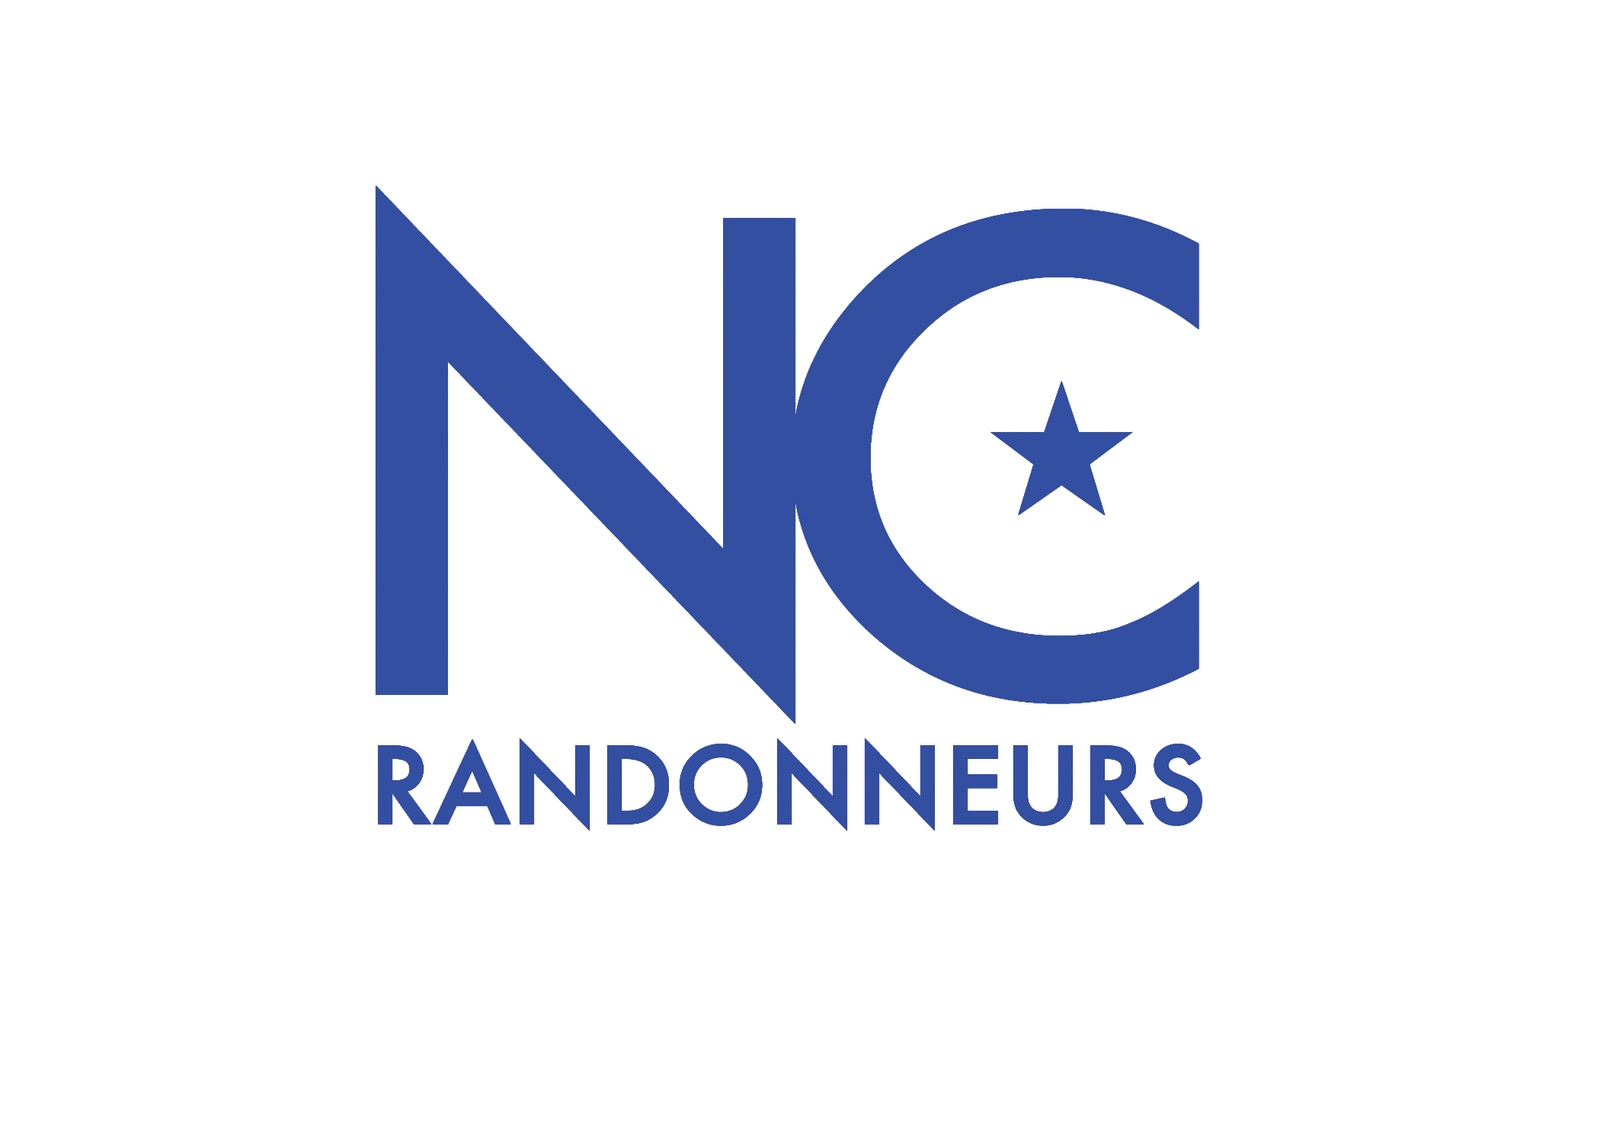 Nc Logo